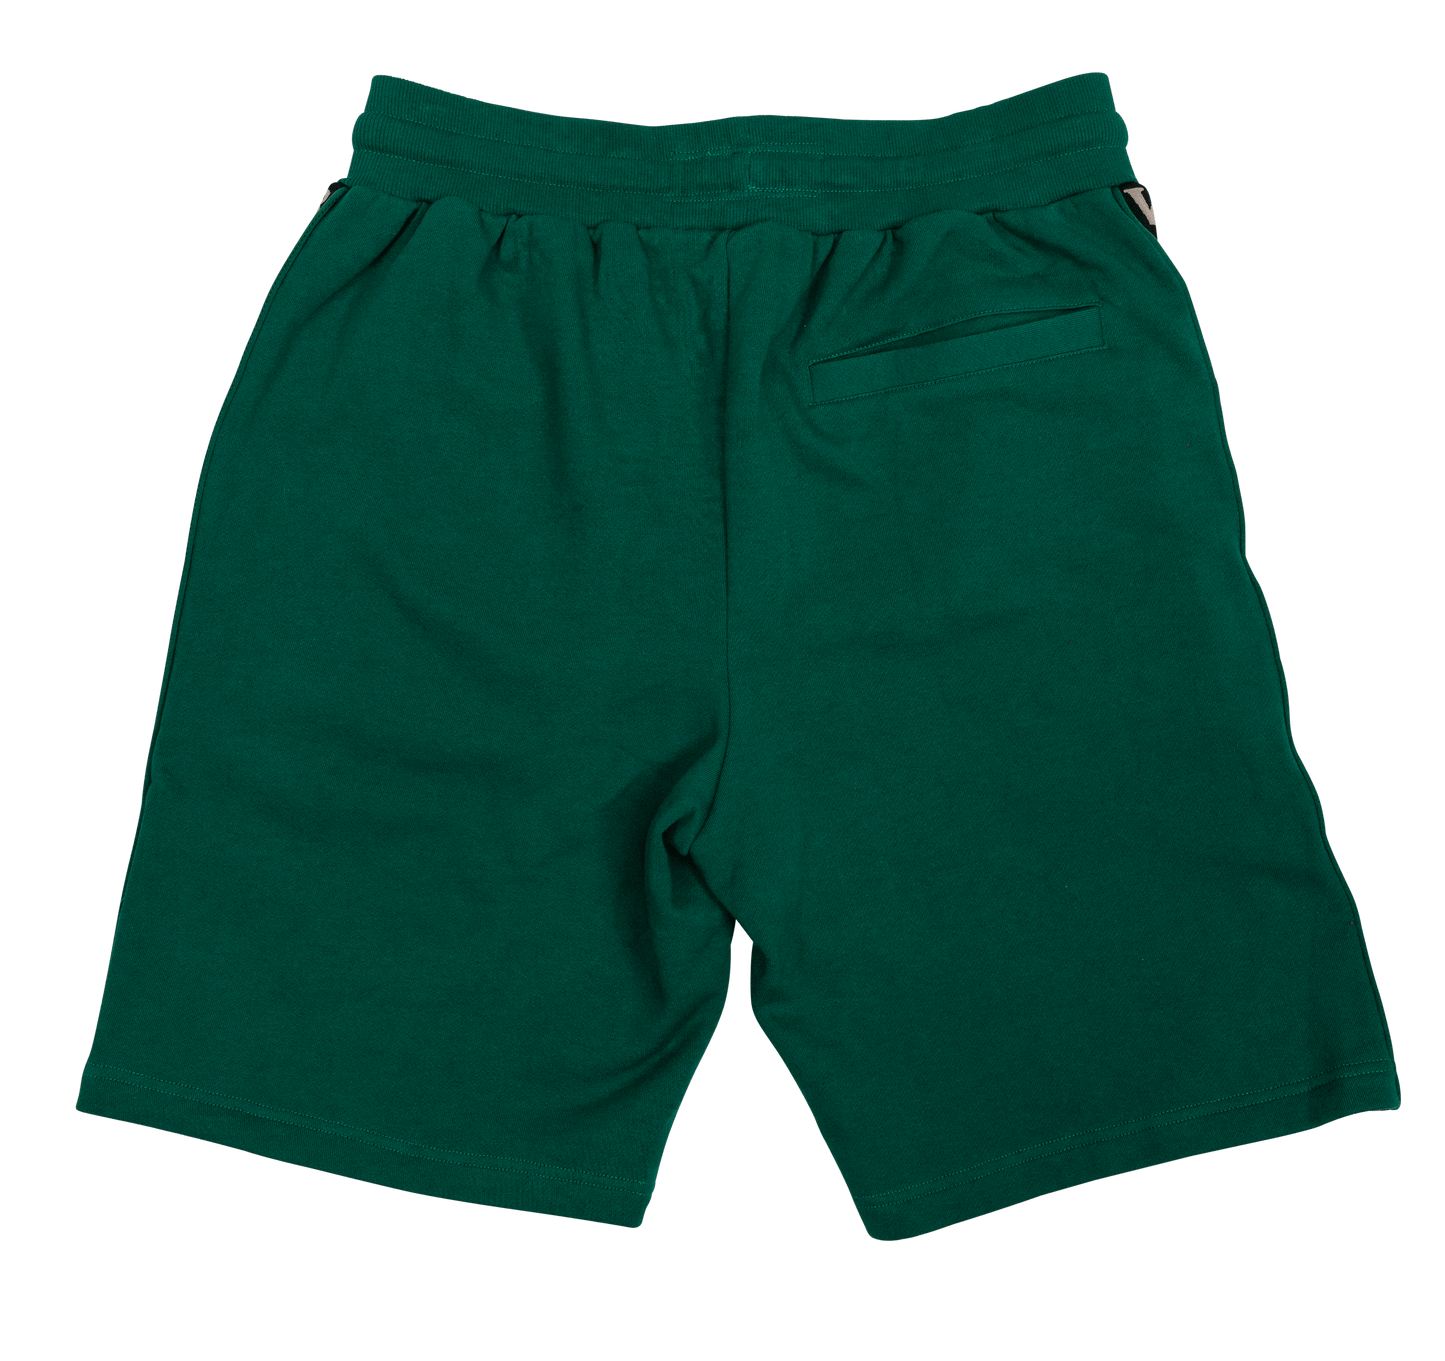 Victor Bravo's Shorts VB Initials Fleece Short Diesel